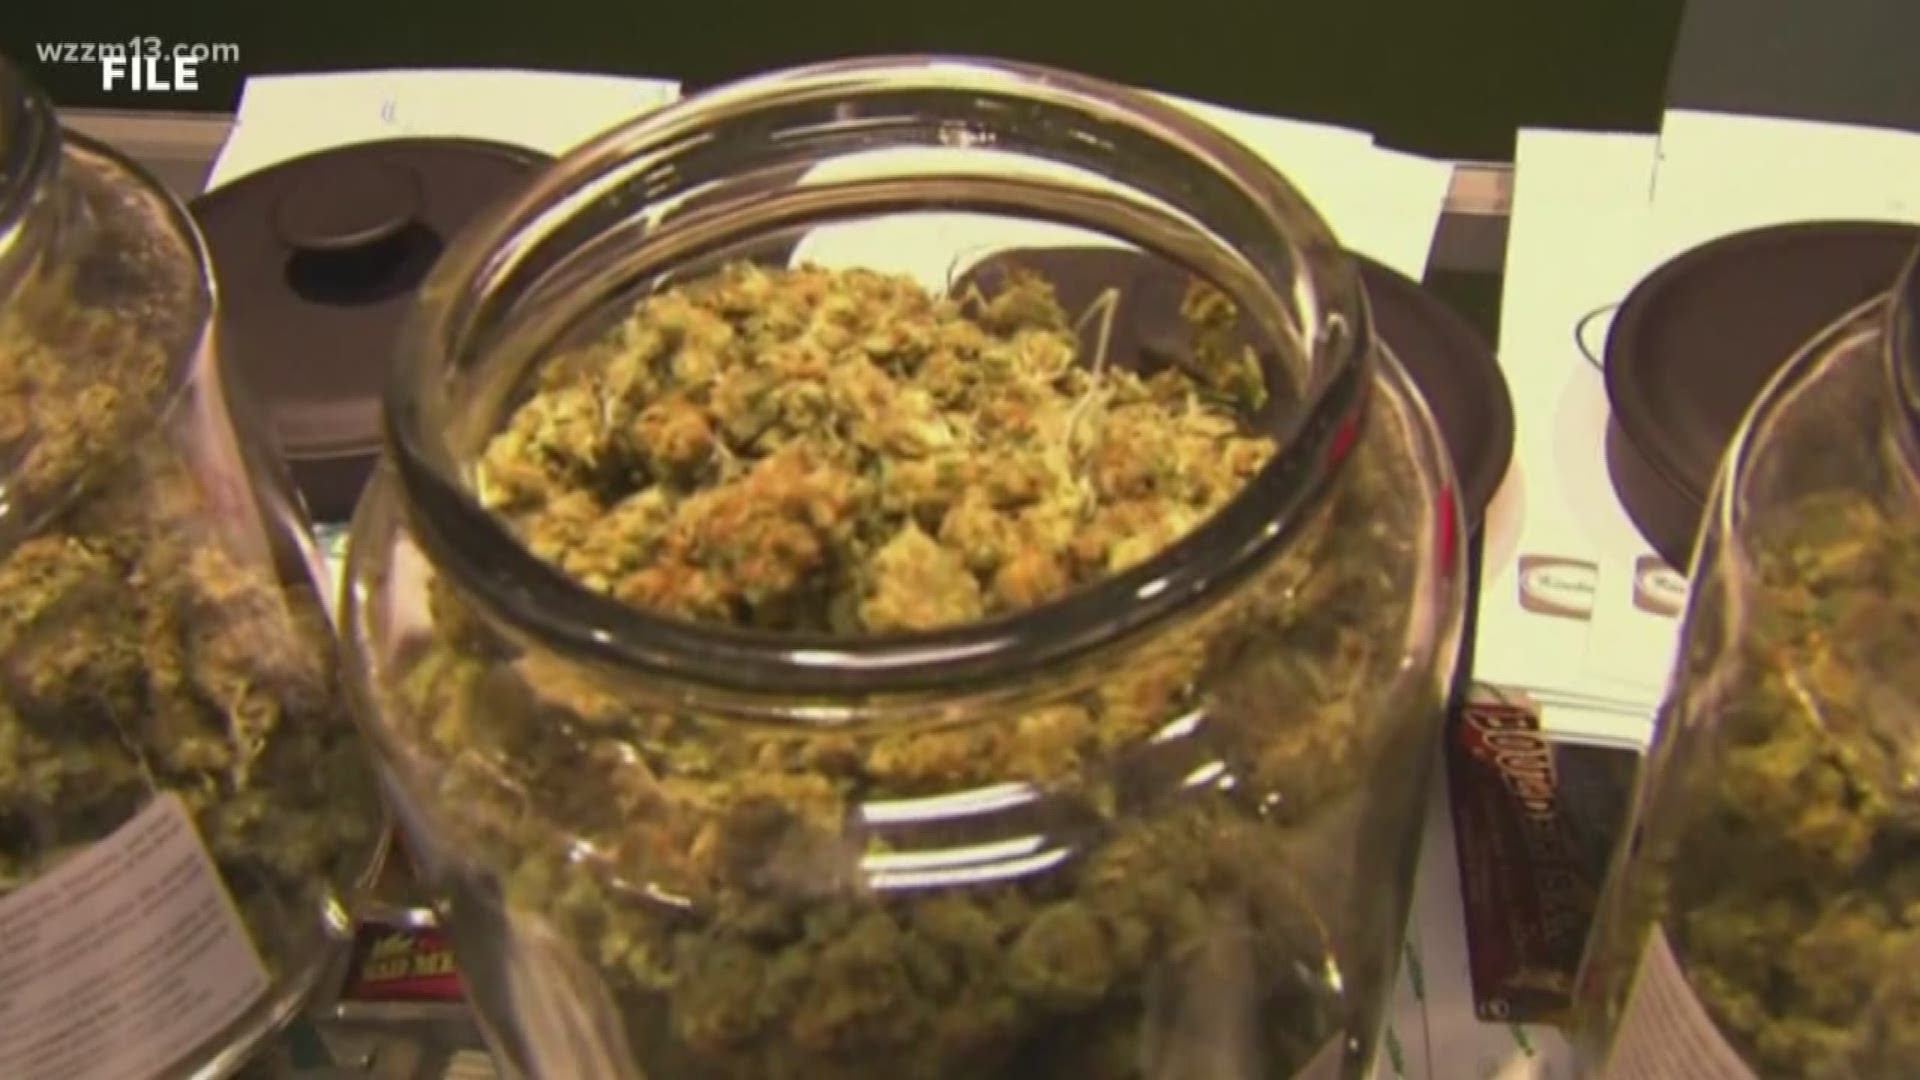 Delays continue for medical marijuana regulation